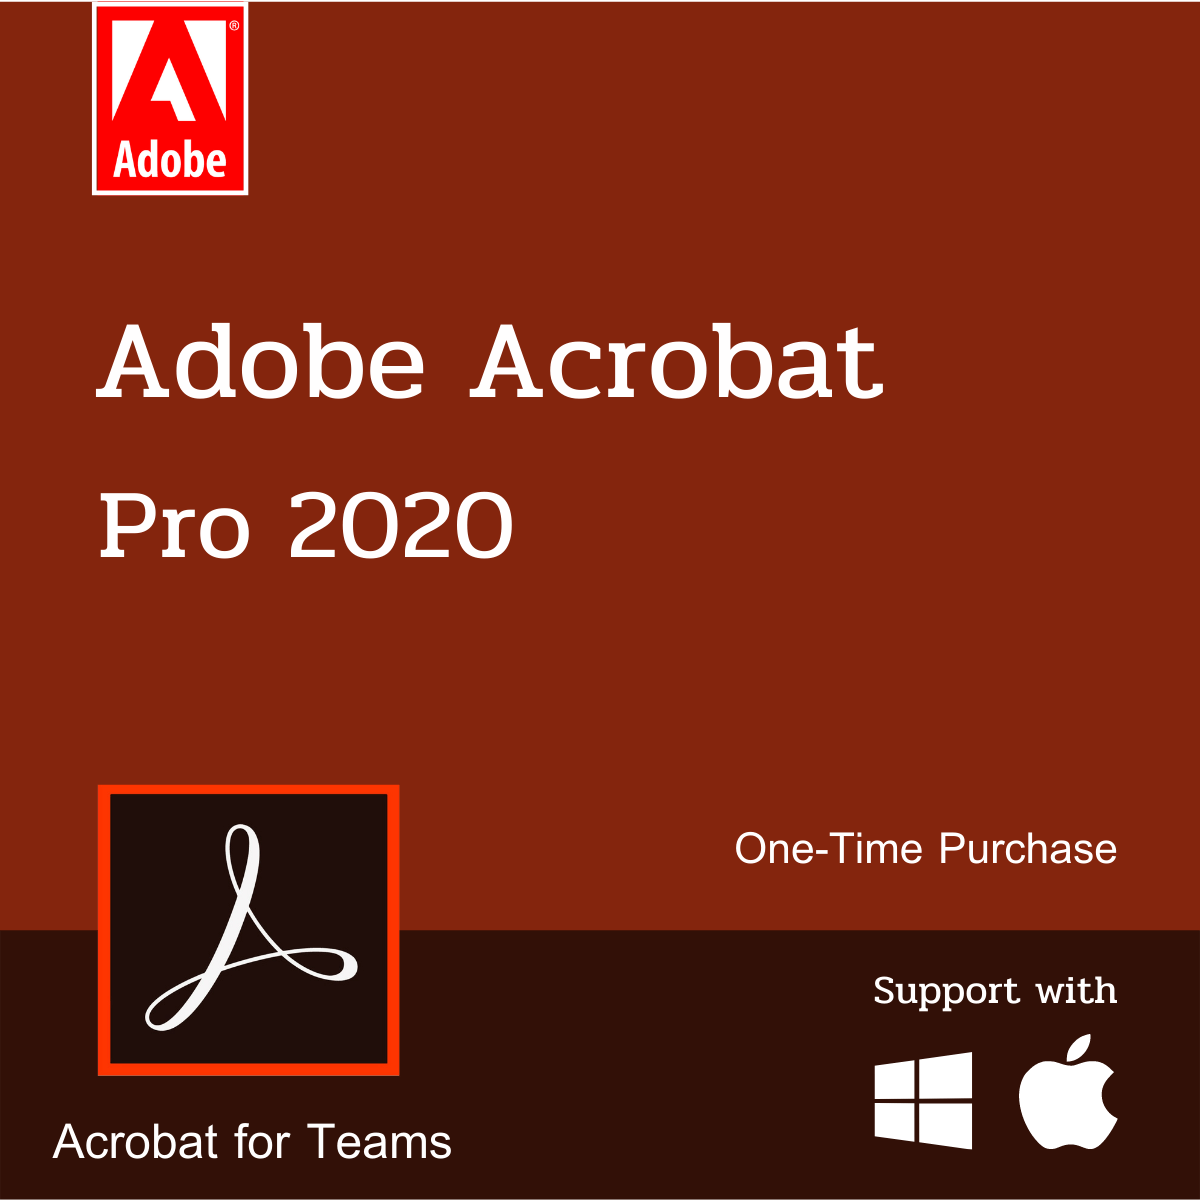 Adobe Acrobat Pro 2020 | Full Version | Genuine Lifetime License | Australian Stock - INFINITE-ITECH